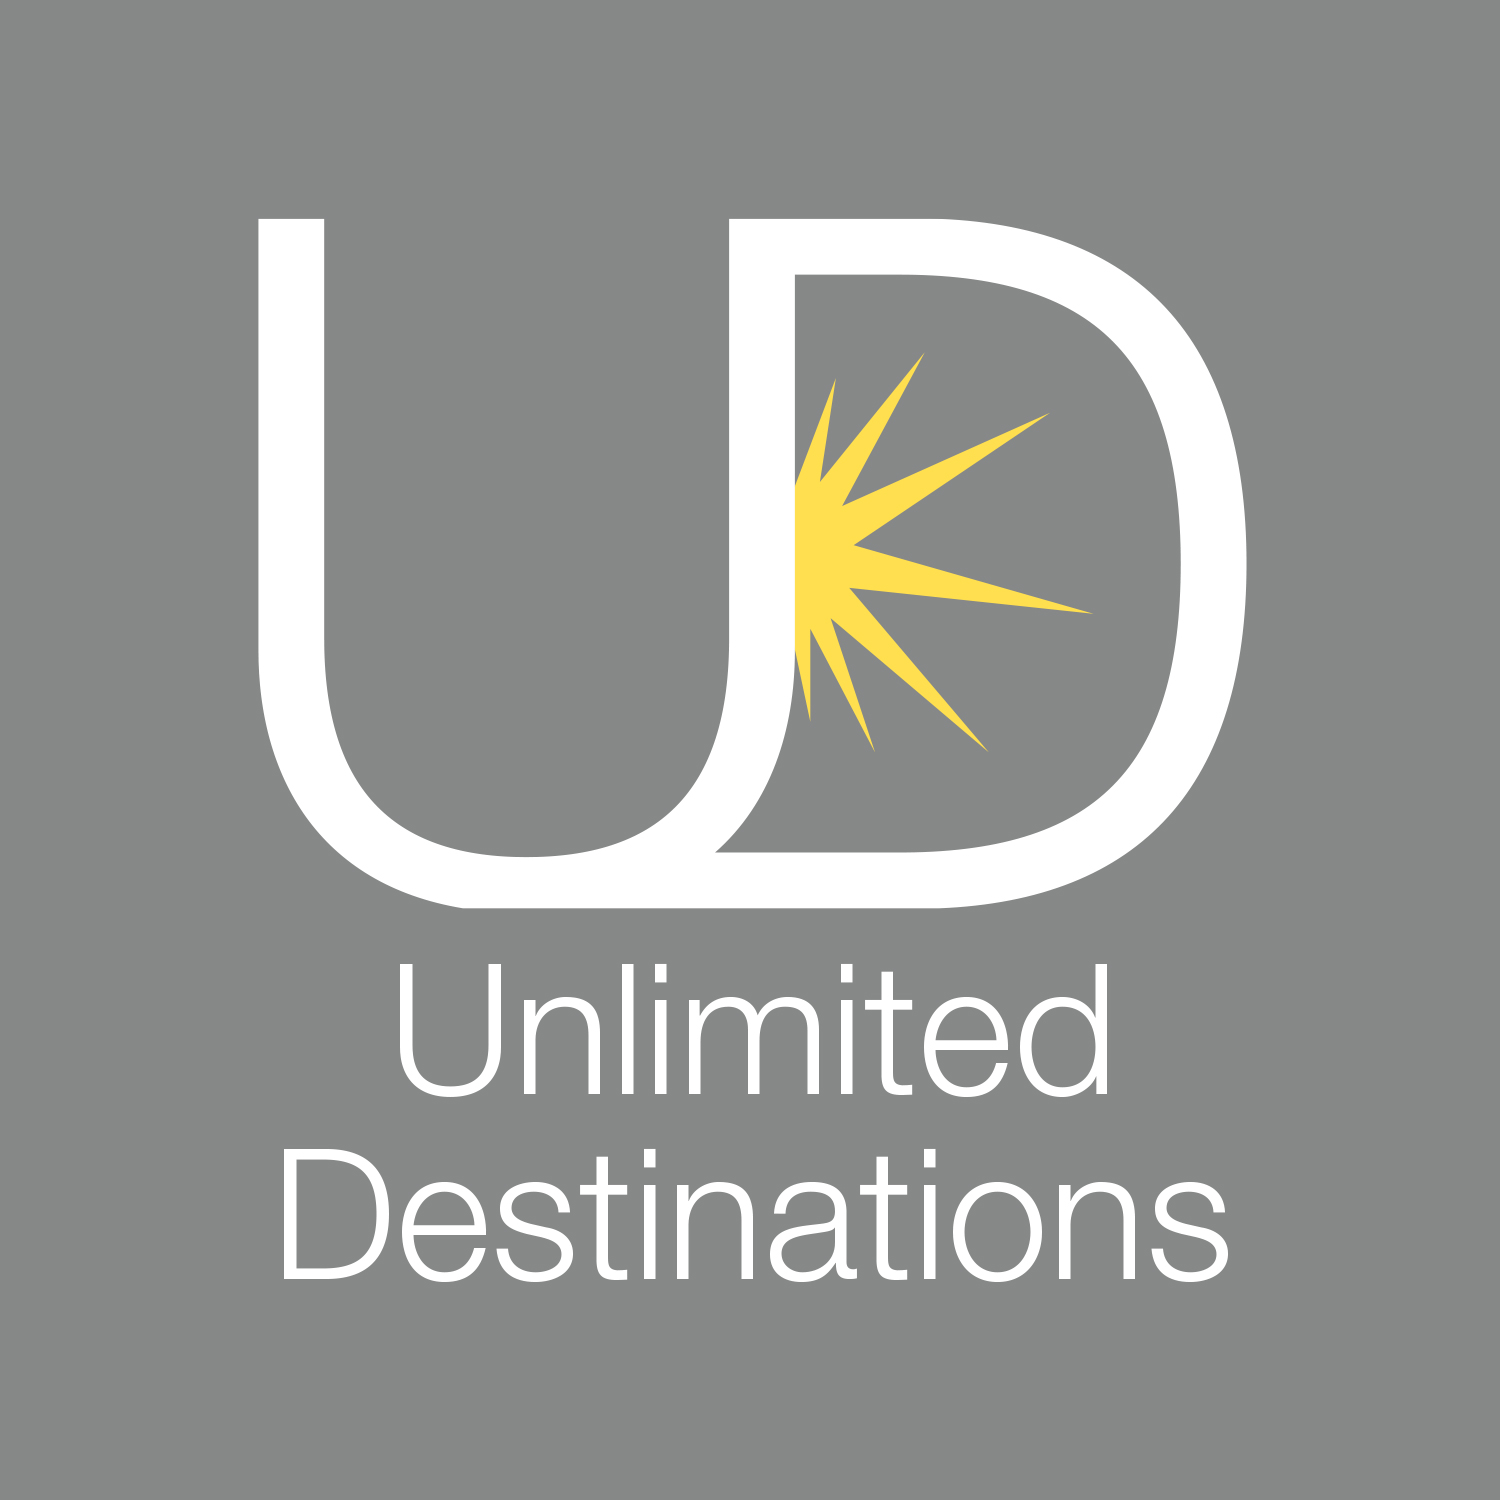 Unlimited-Destinations-square-reversed.jpg